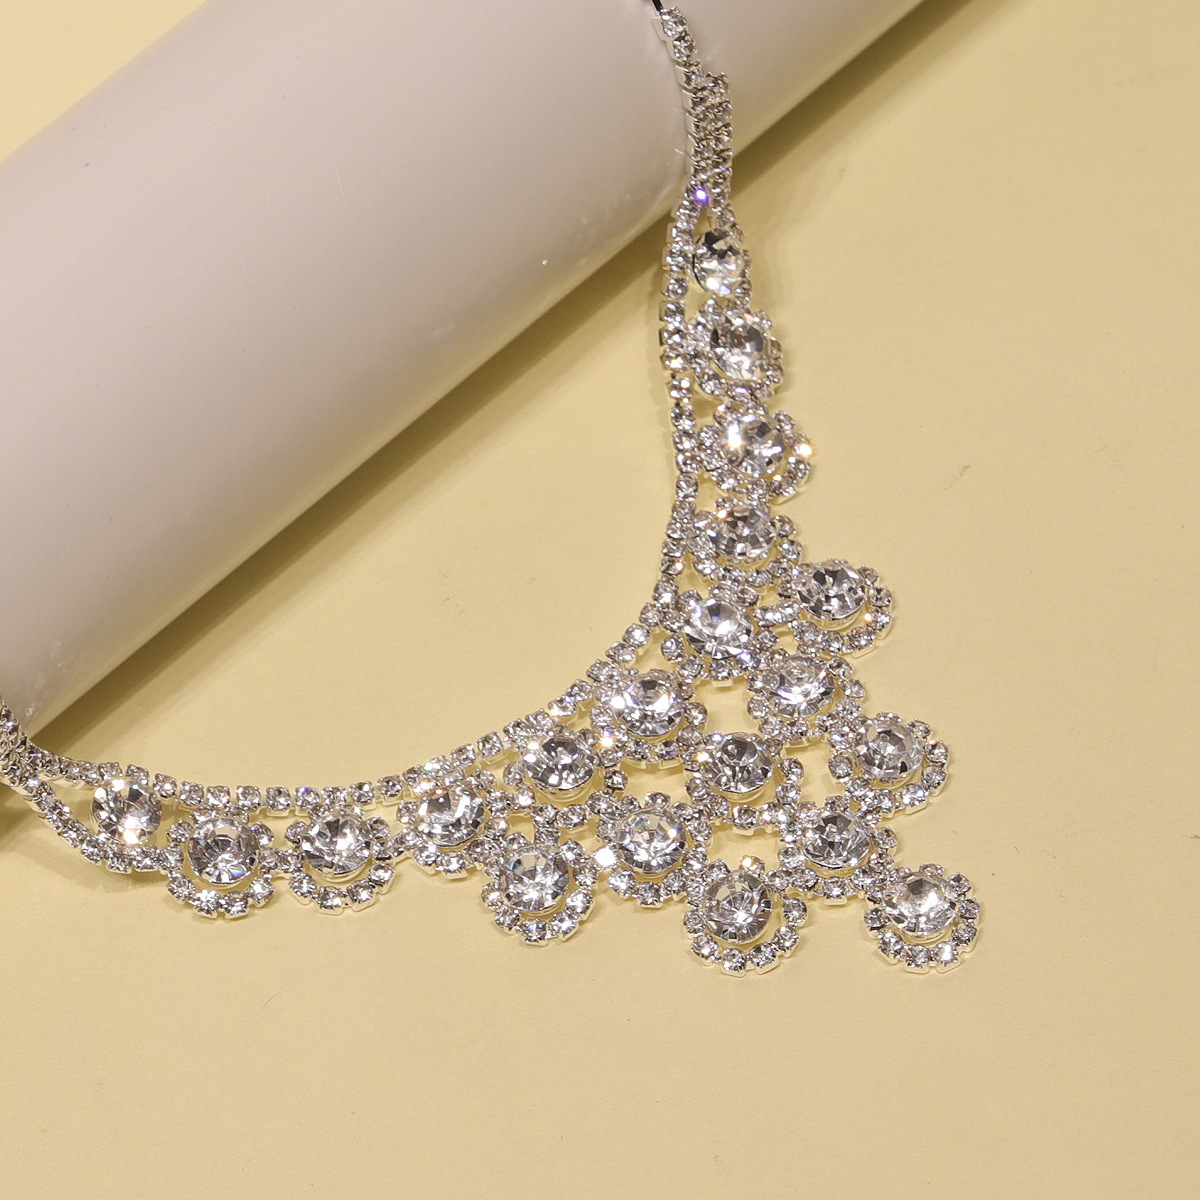 Europese en Amerikaanse mode Claw Chain Water Diamond ketting oorbellen avondjurk veelzijdige klauwketen bruids sieraden set